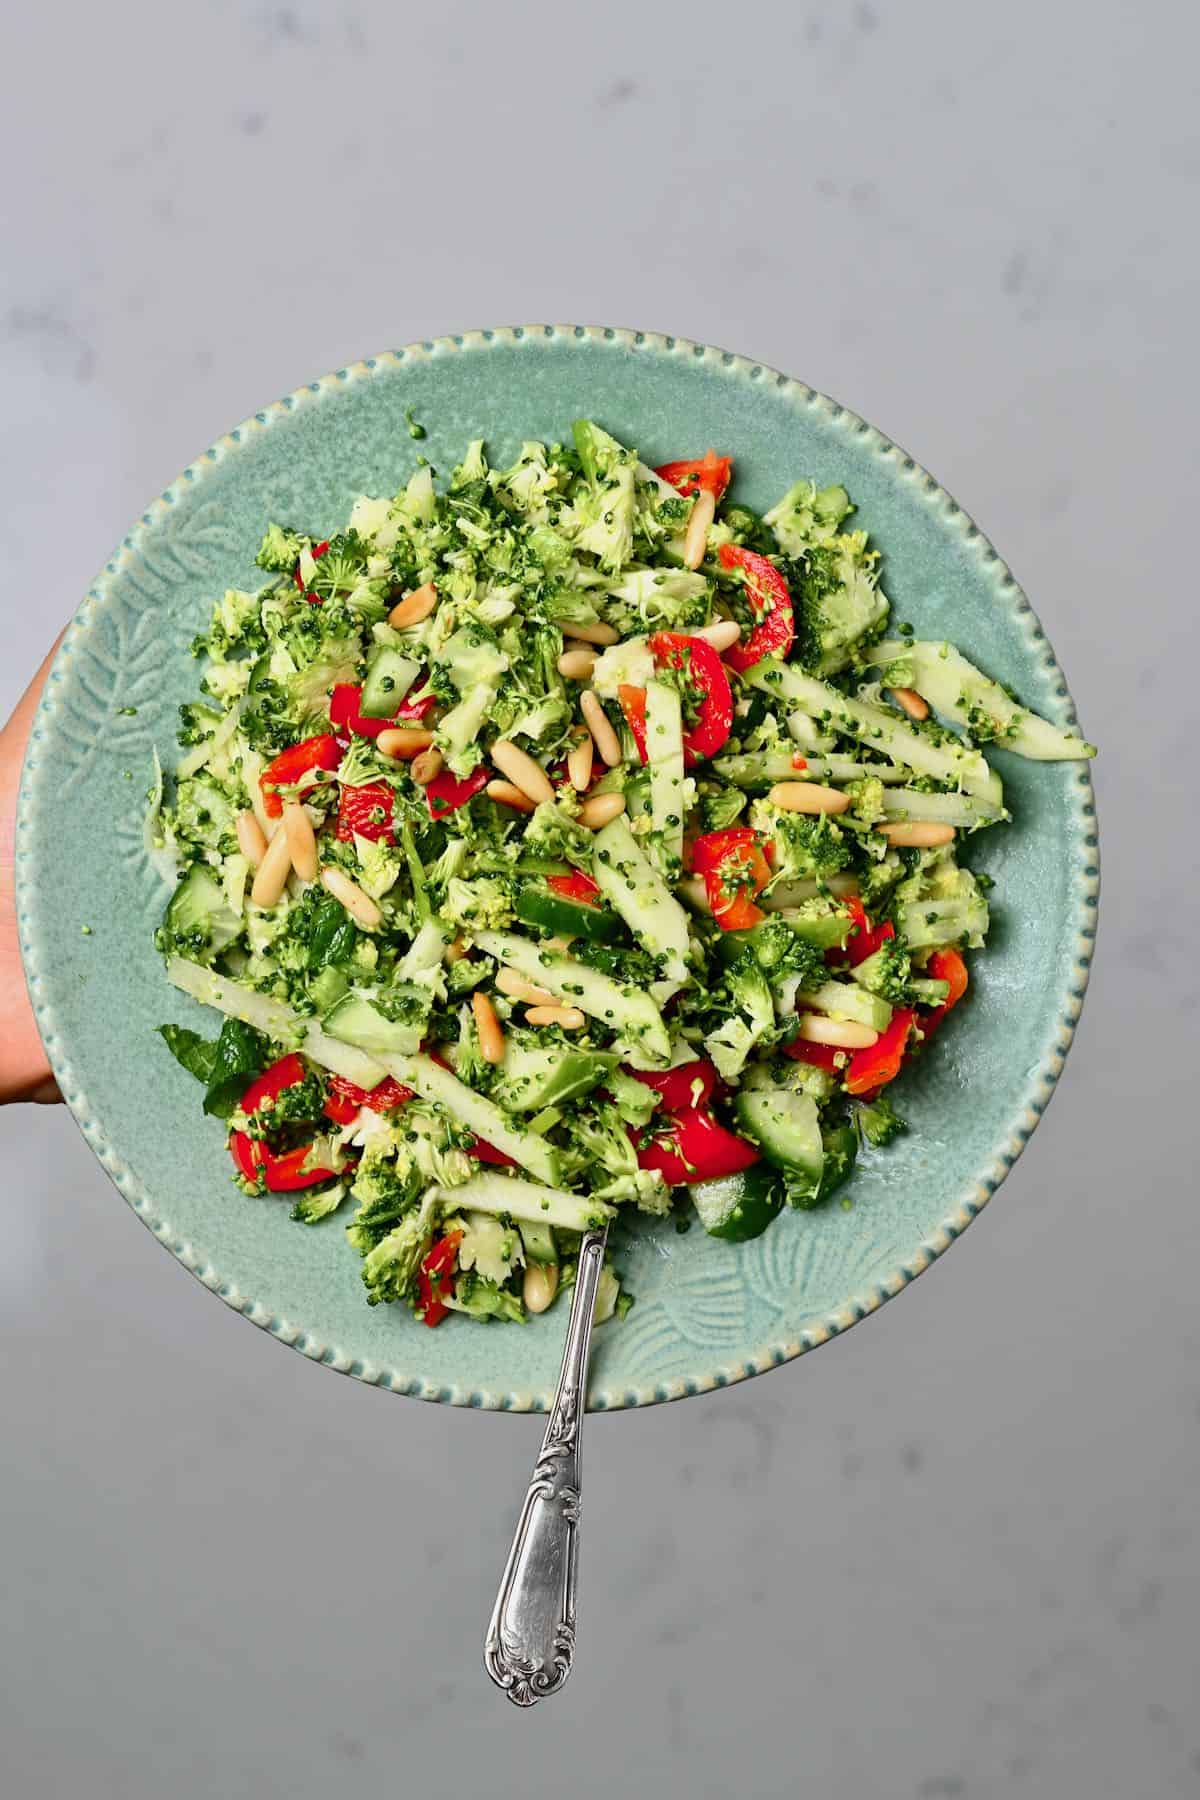 A serving of broccoli apple salad